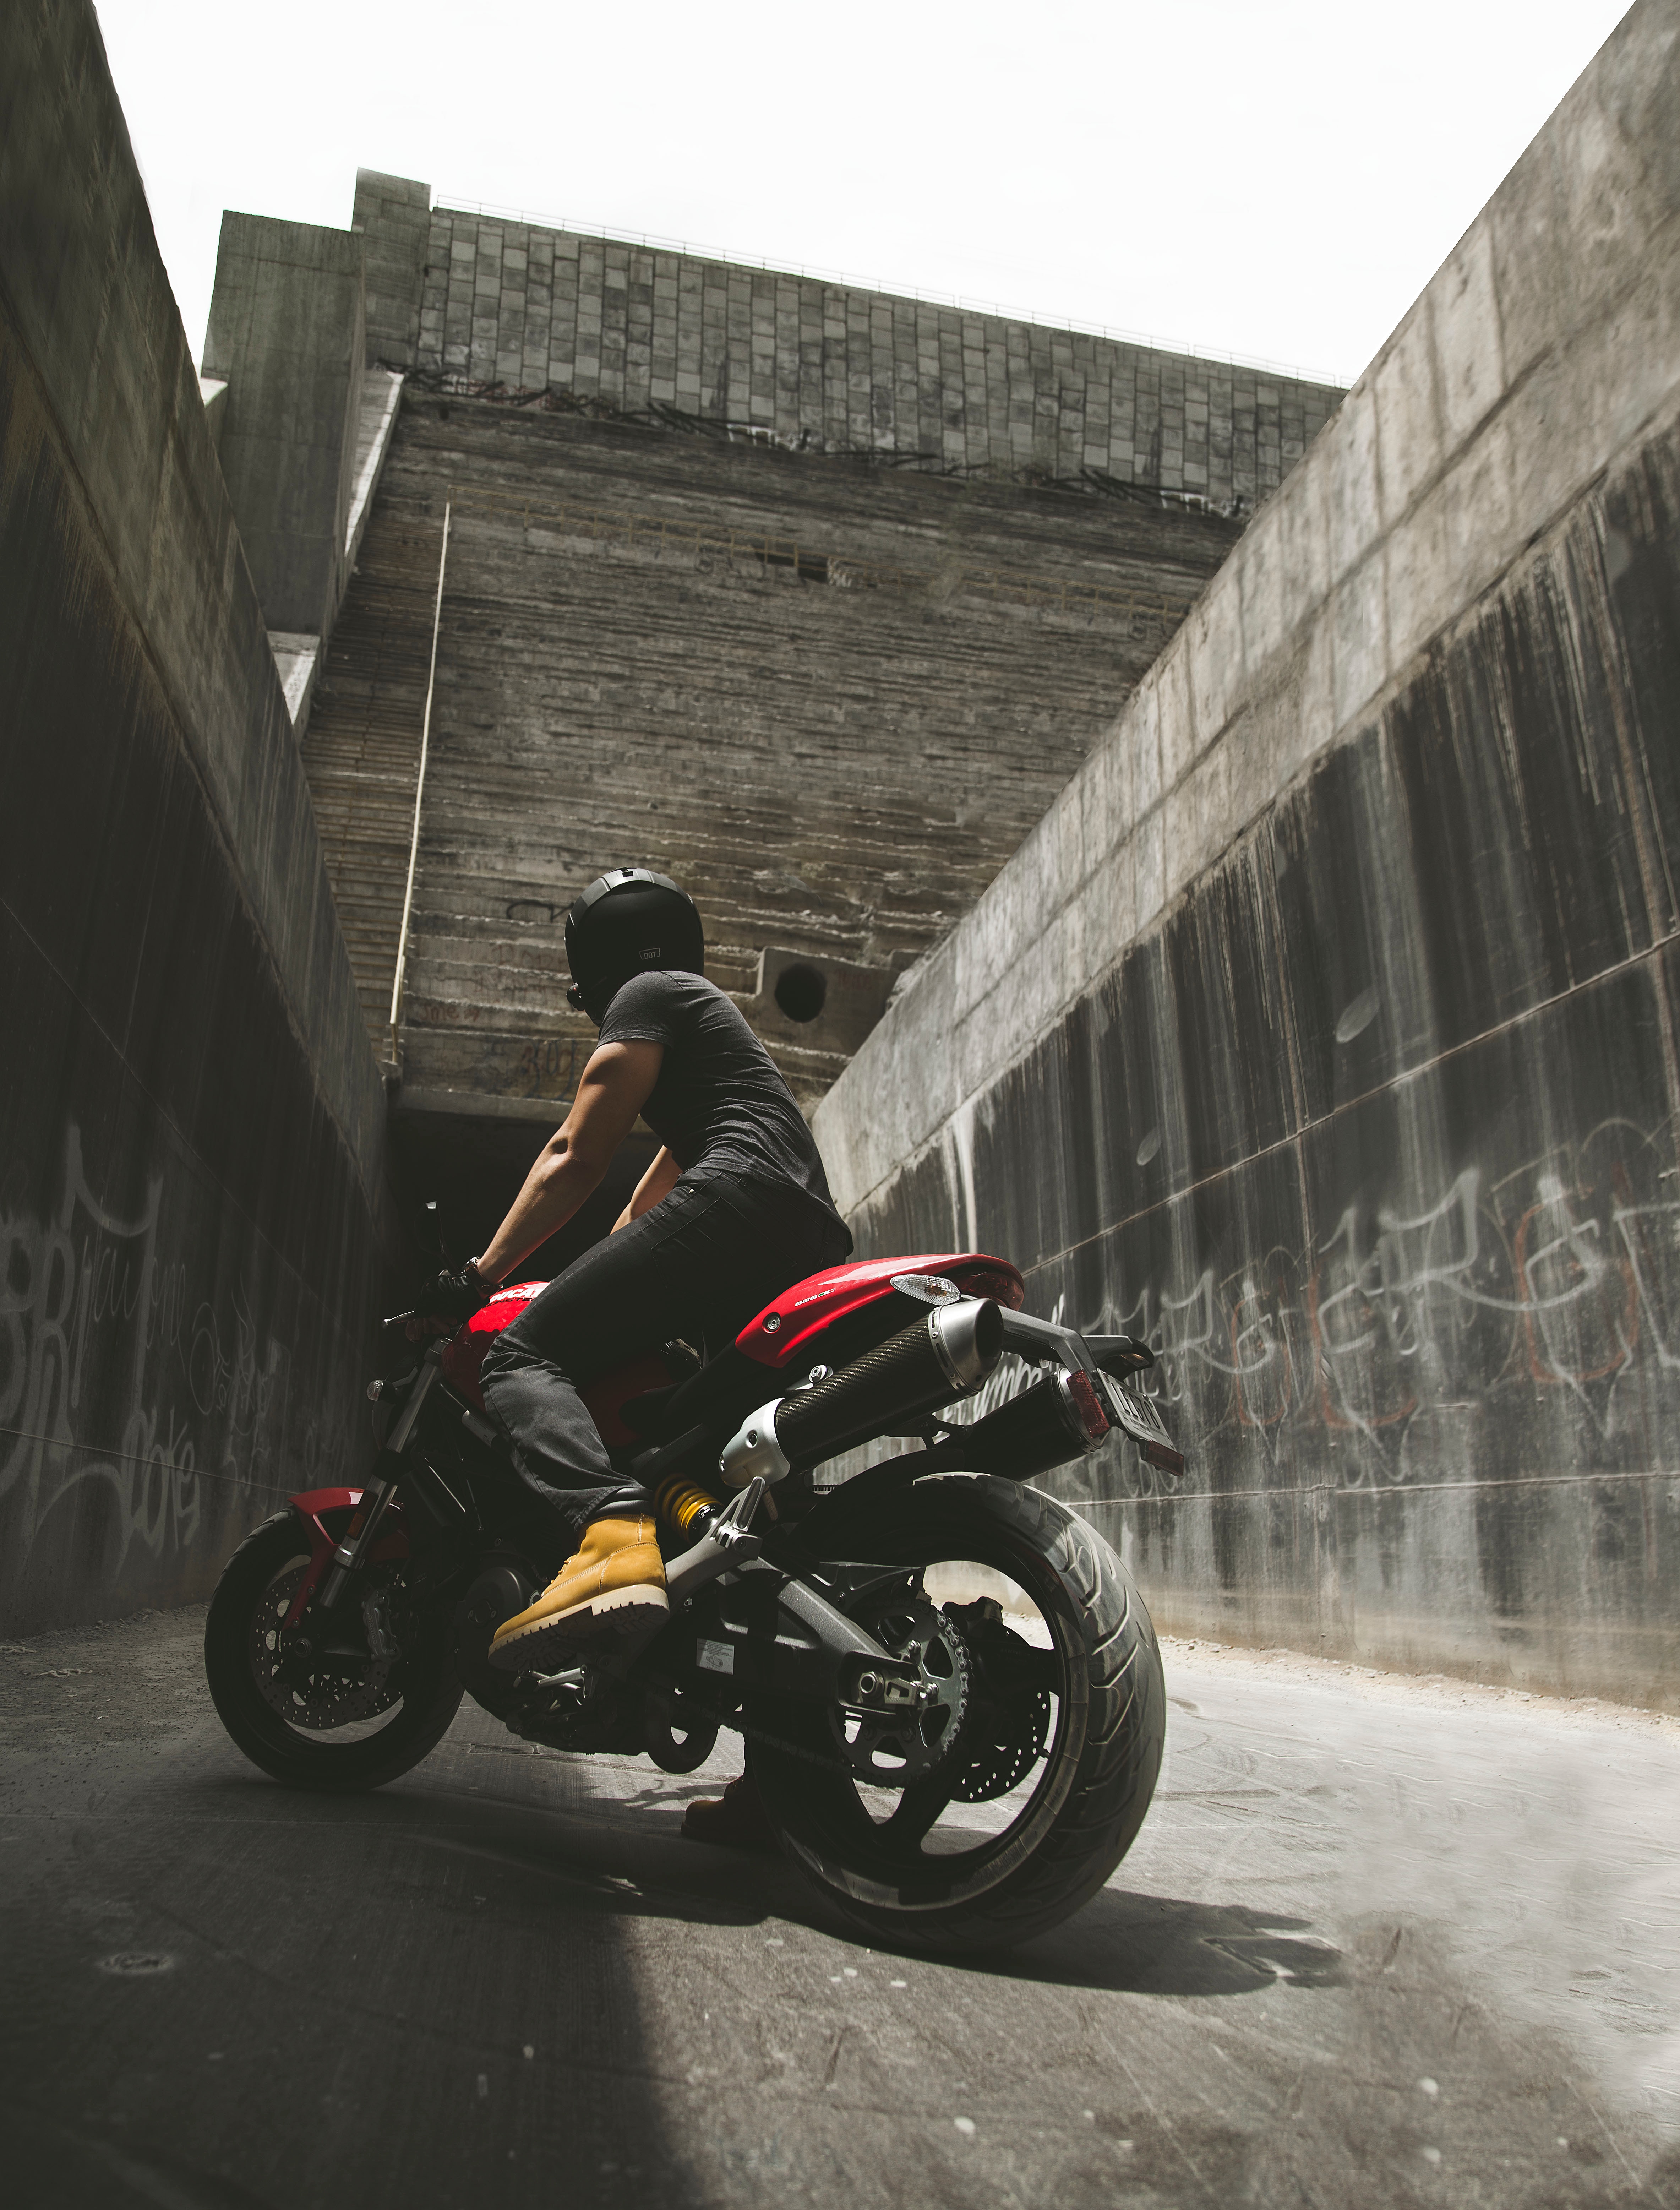 concrete, walls, motorcycles, motorcyclist, helmet, motorcycle